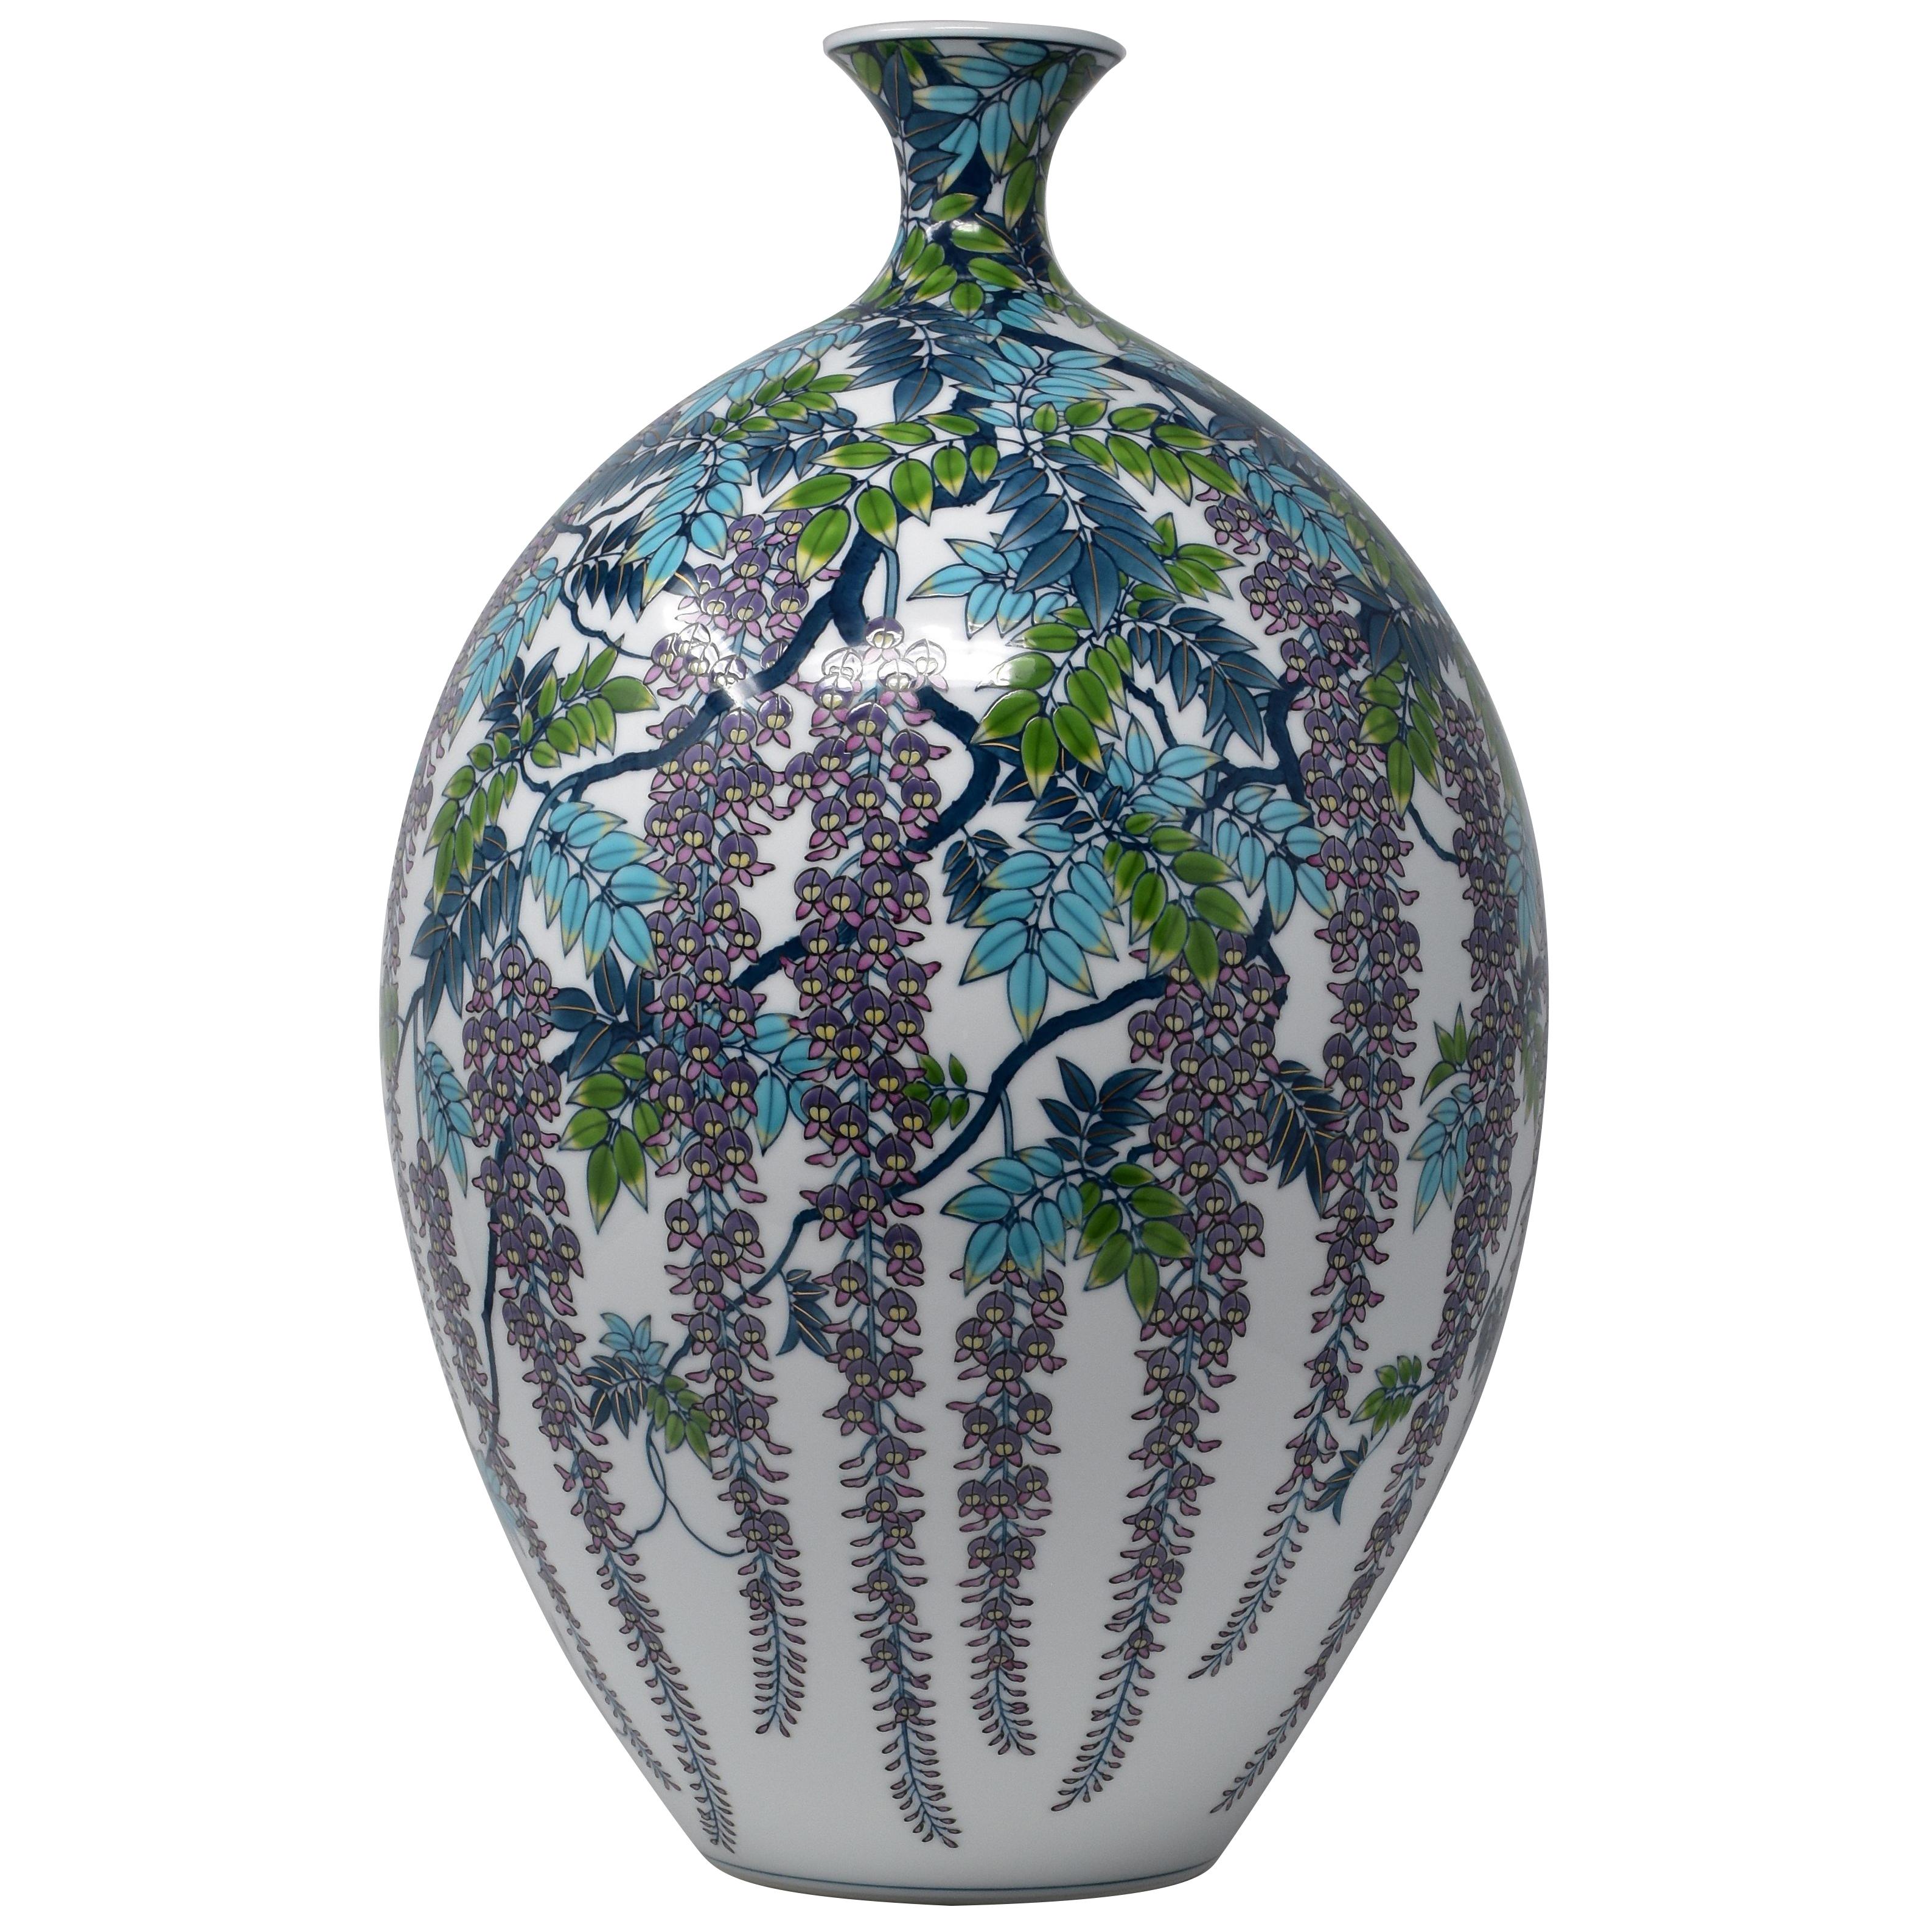 Japanese Contemporary Blue Purple Green Porcelain Vase by Master Artist